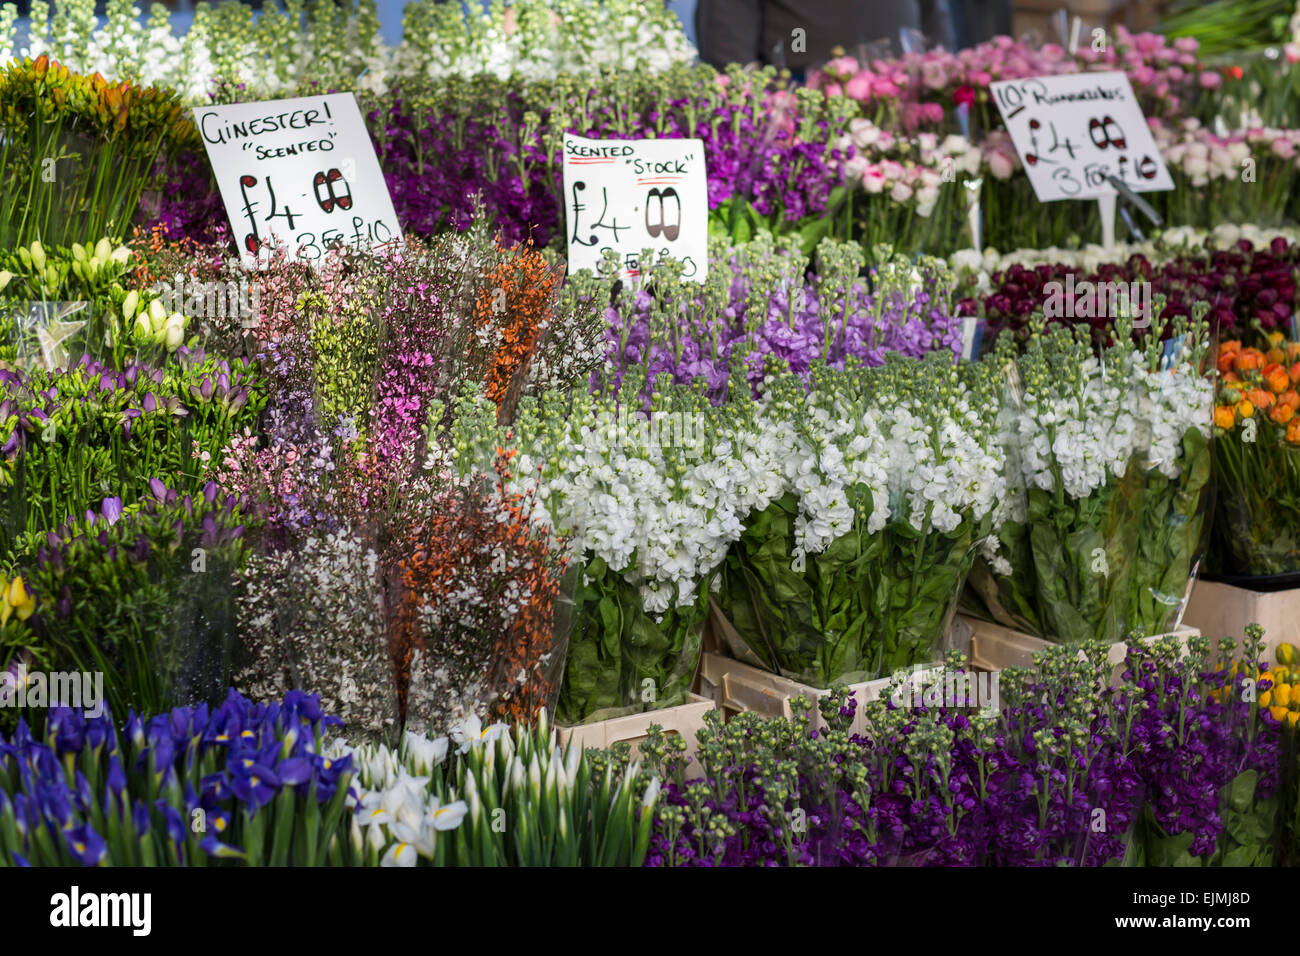 Cut flowers for sale, Columbia Flower Market, London Stock Photo